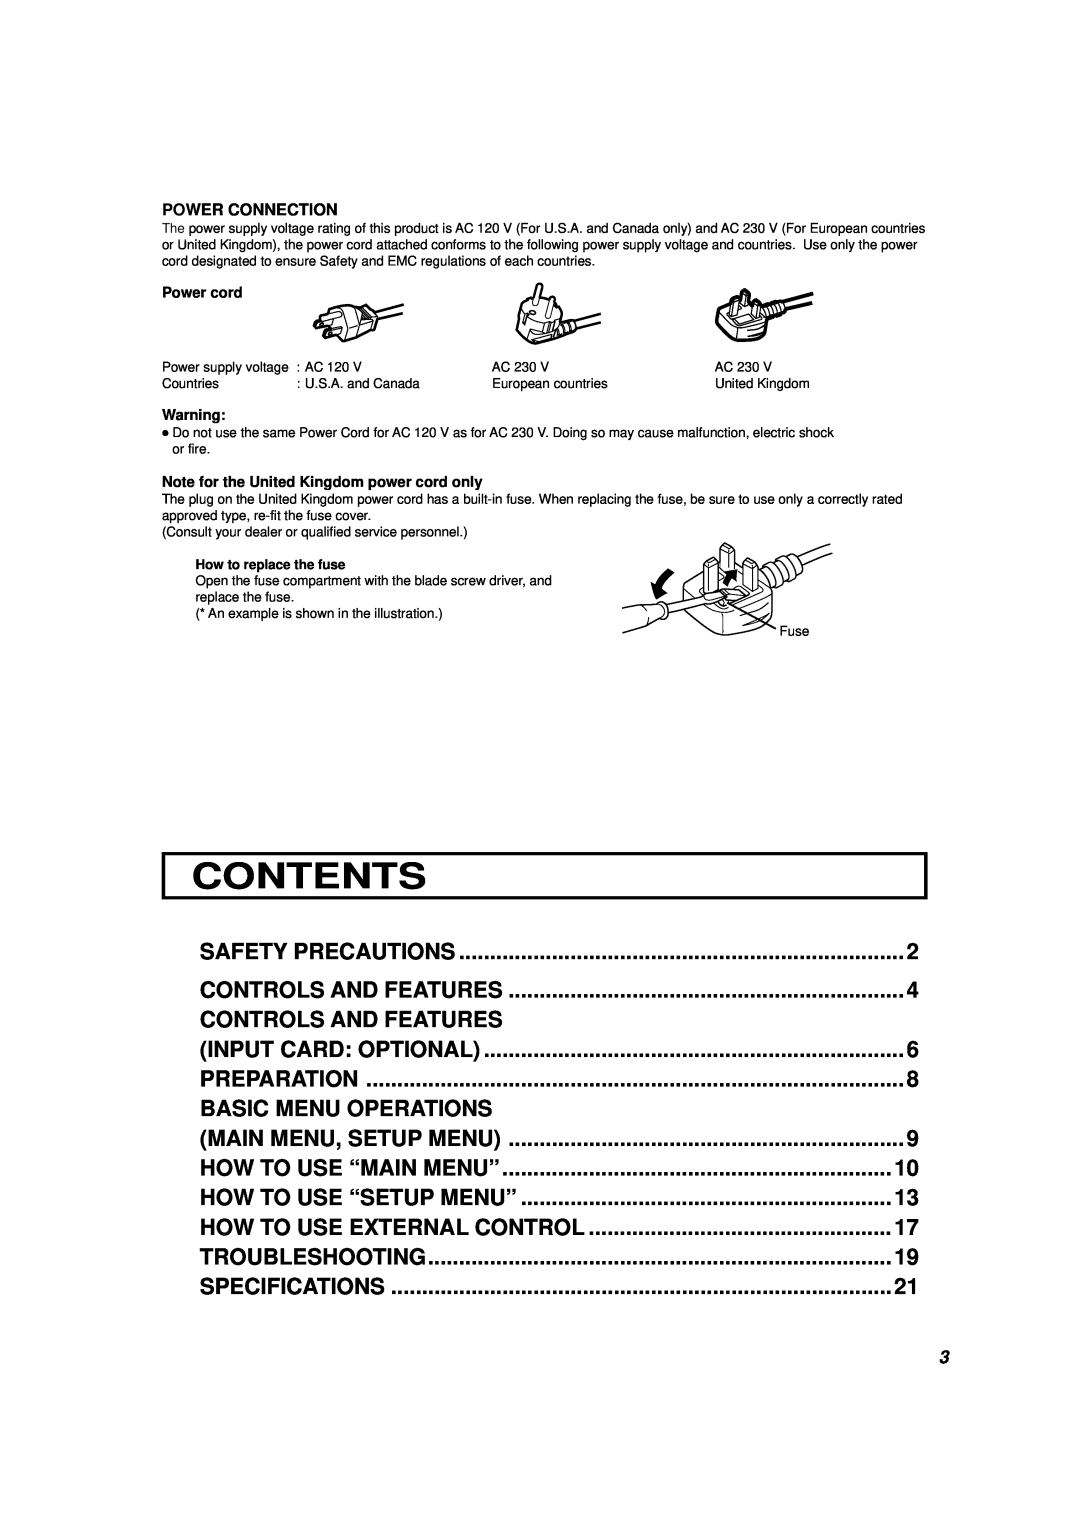 JVC V1700CG manual Contents, Controls And Features, Basic Menu Operations 